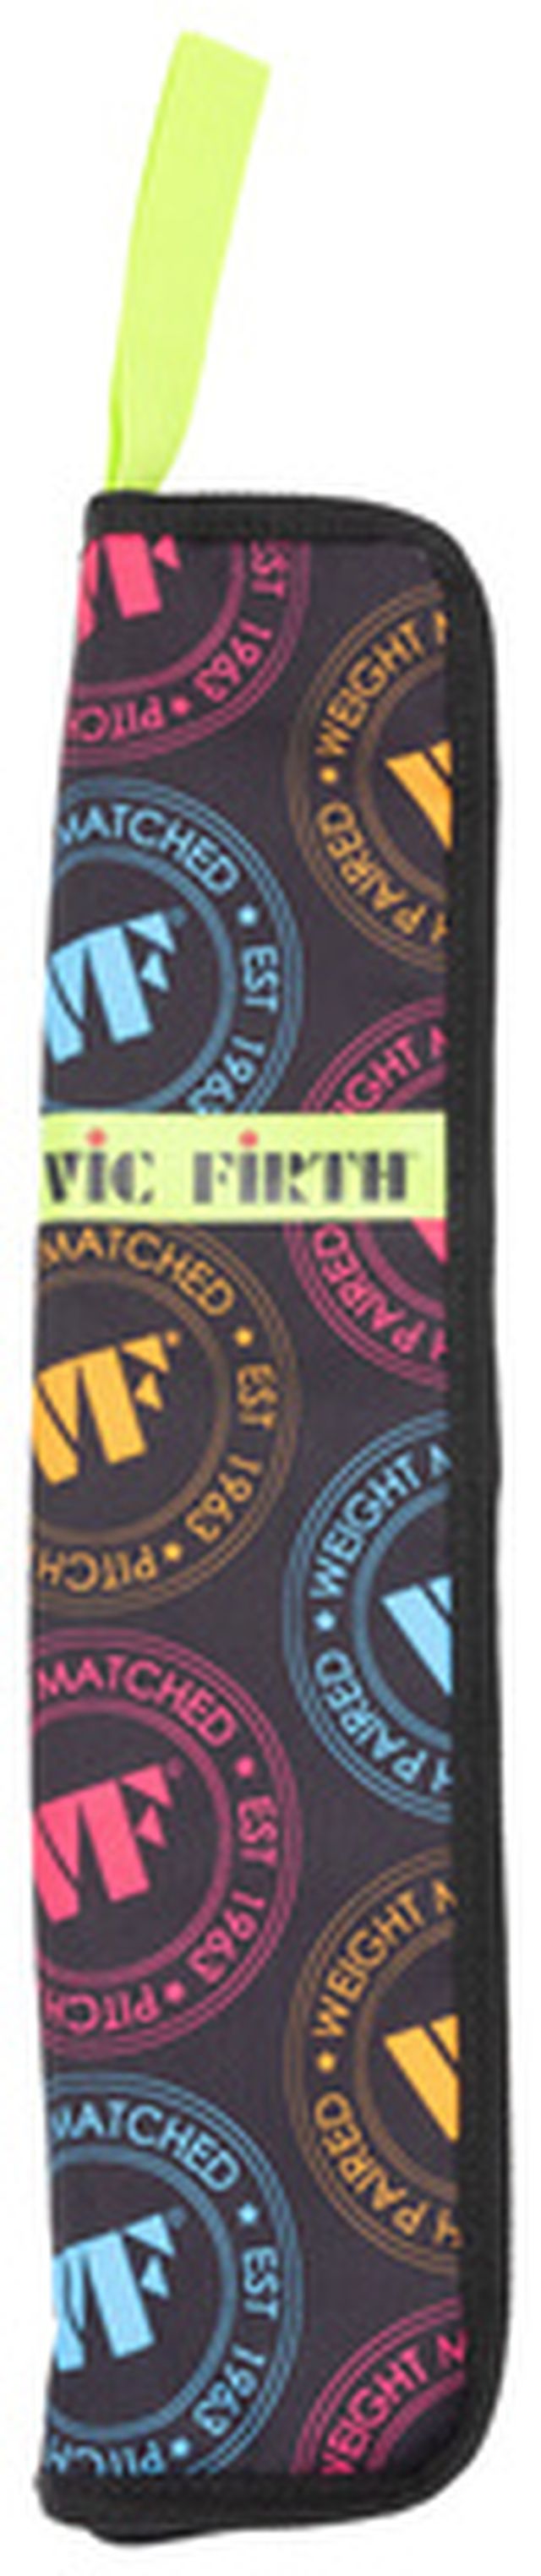 Vic Firth Essential Stick Bag Neon